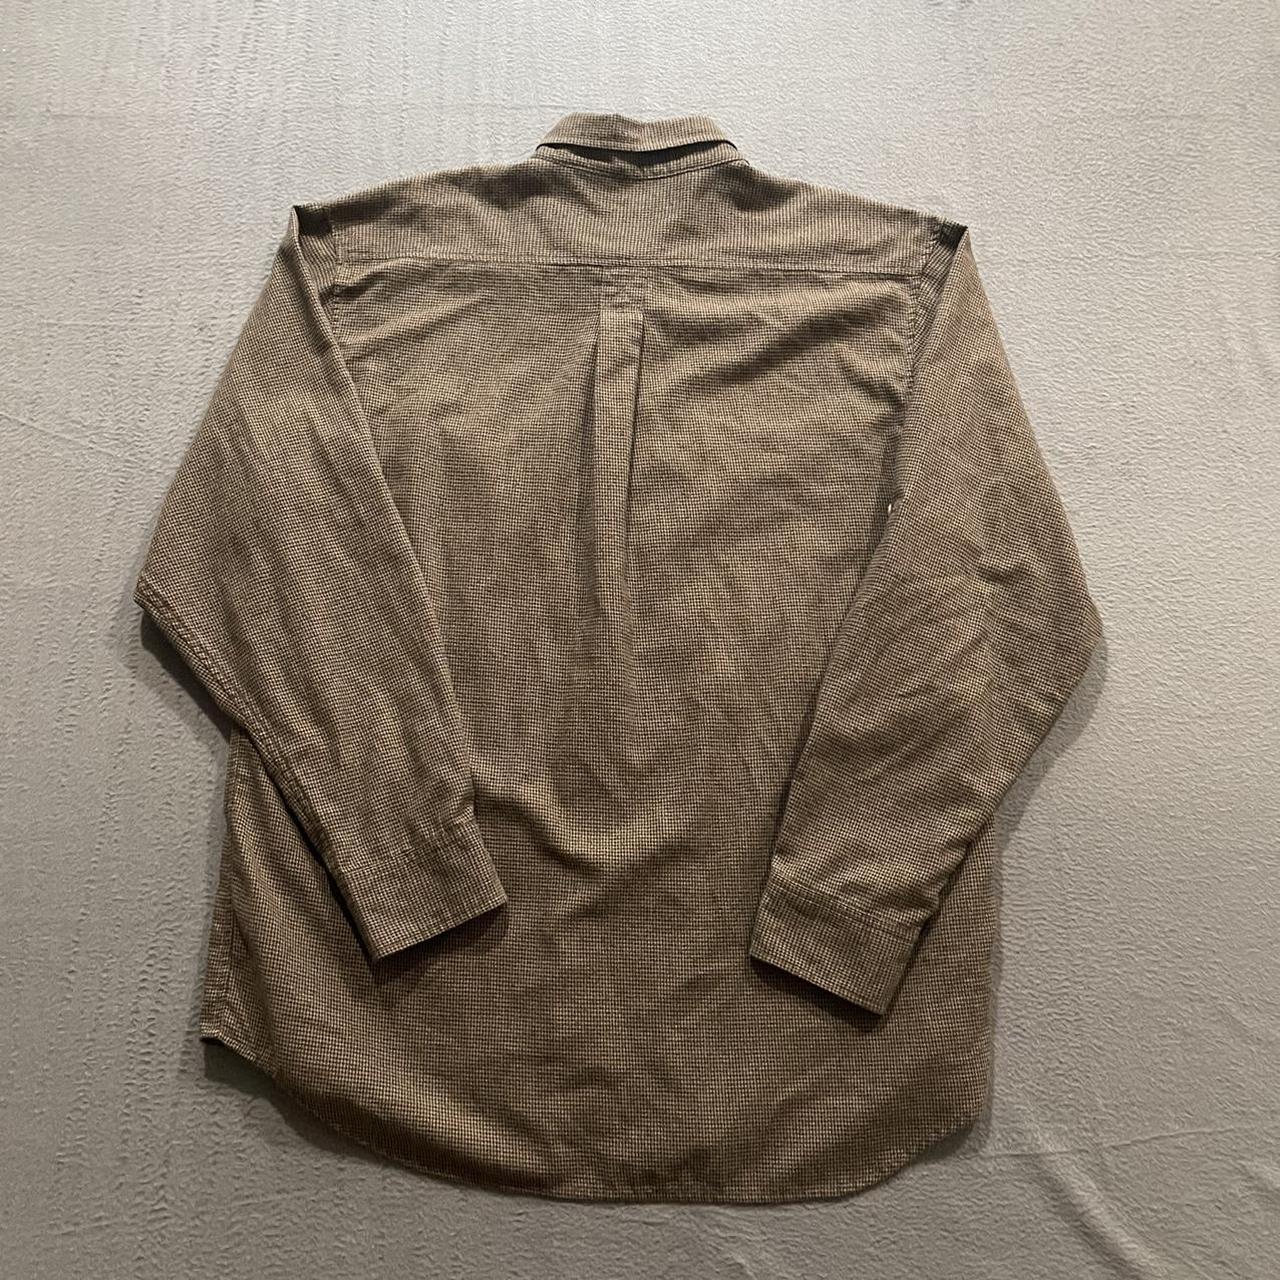 ExOfficio Men's Black and Brown Shirt (3)